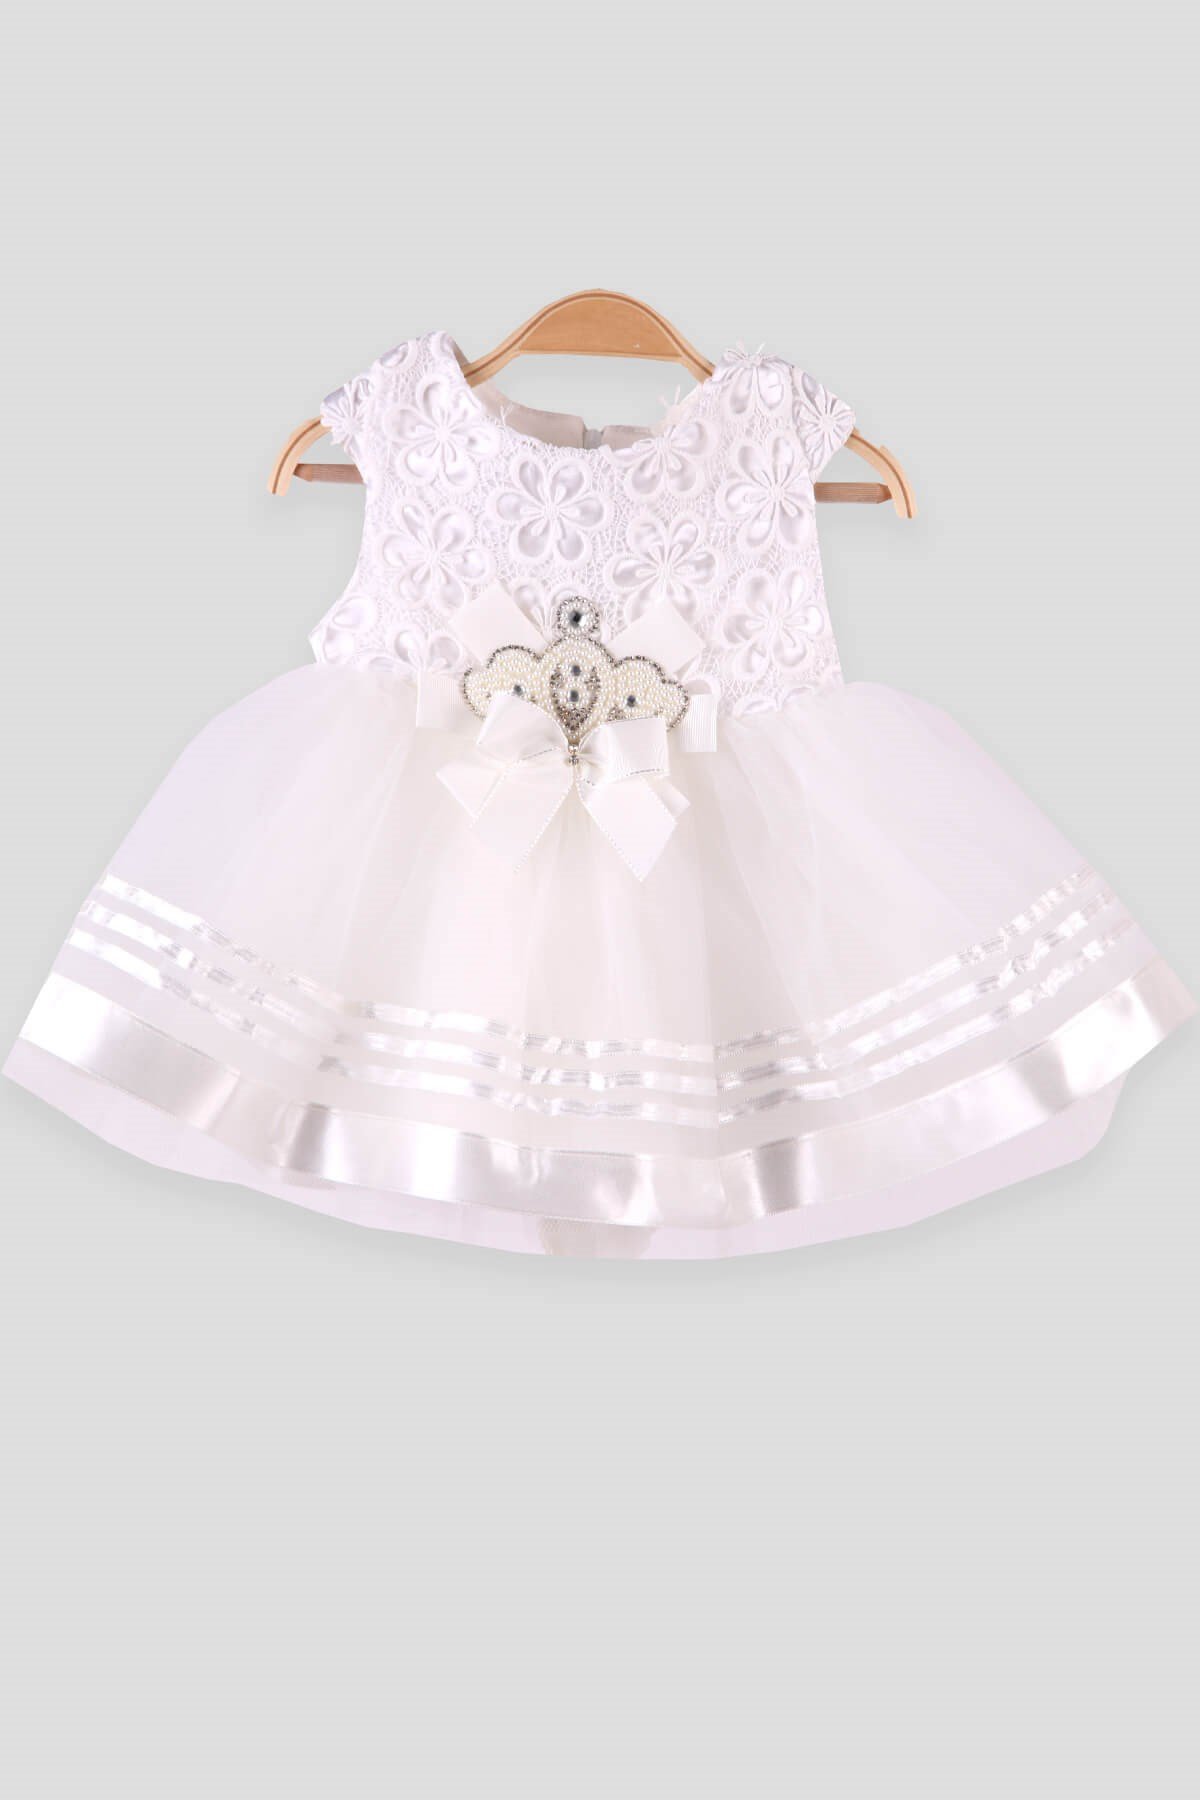 Kız Bebek Mevlüt Elbisesi Çiçekli Ekru 0-3 Ay | Breeze Bebek